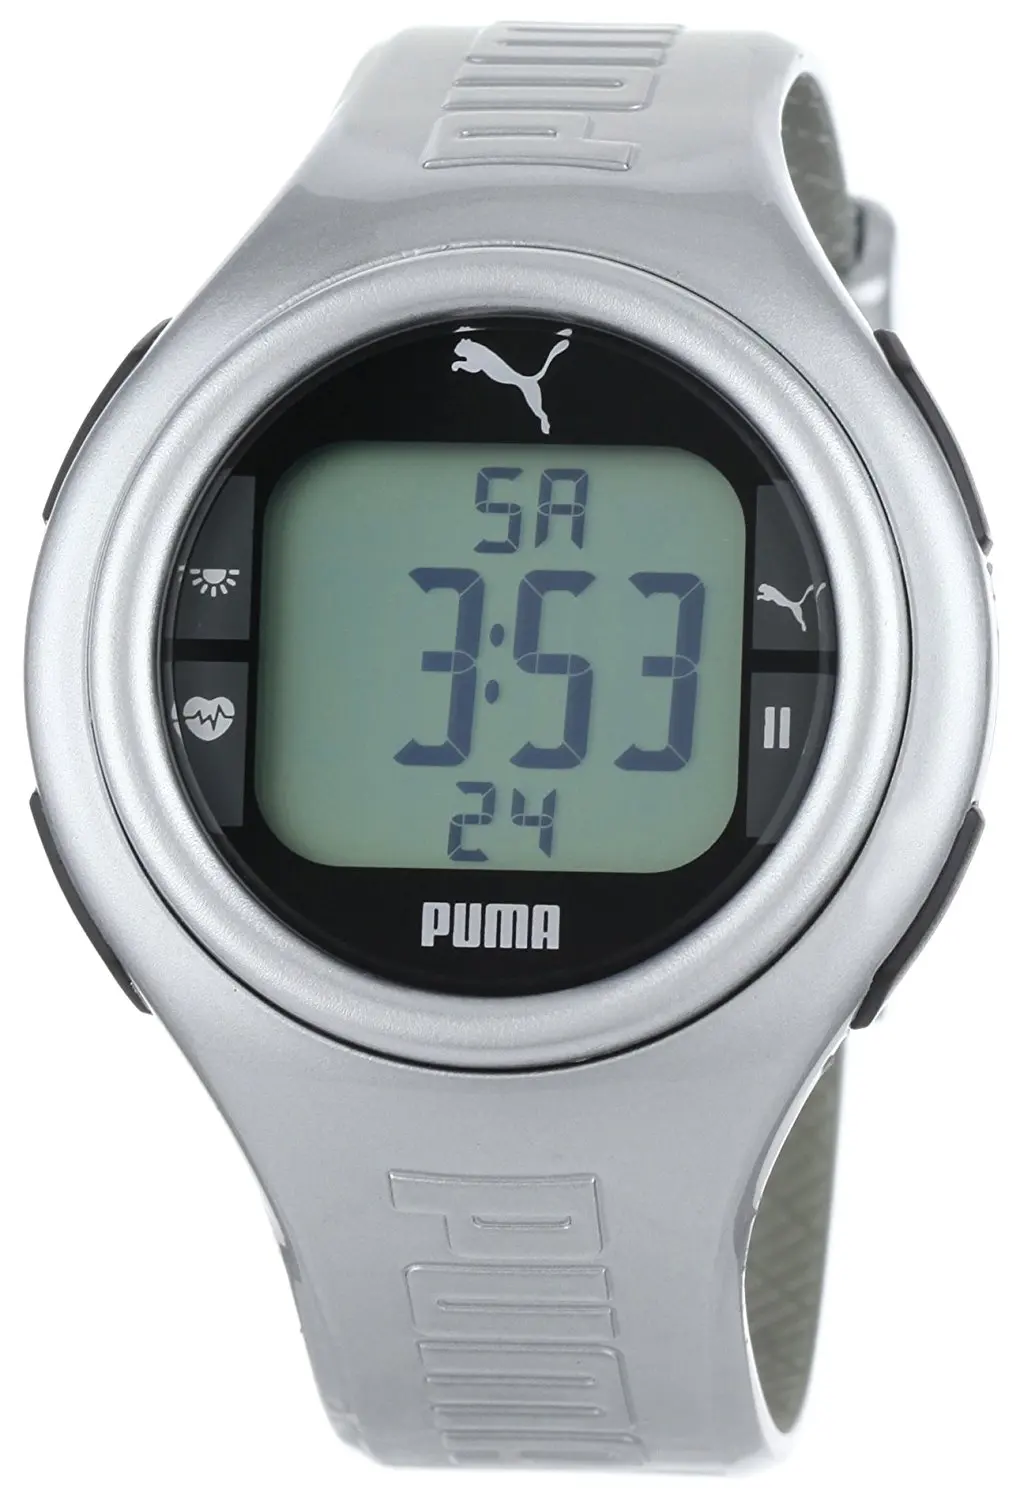 led watch puma price